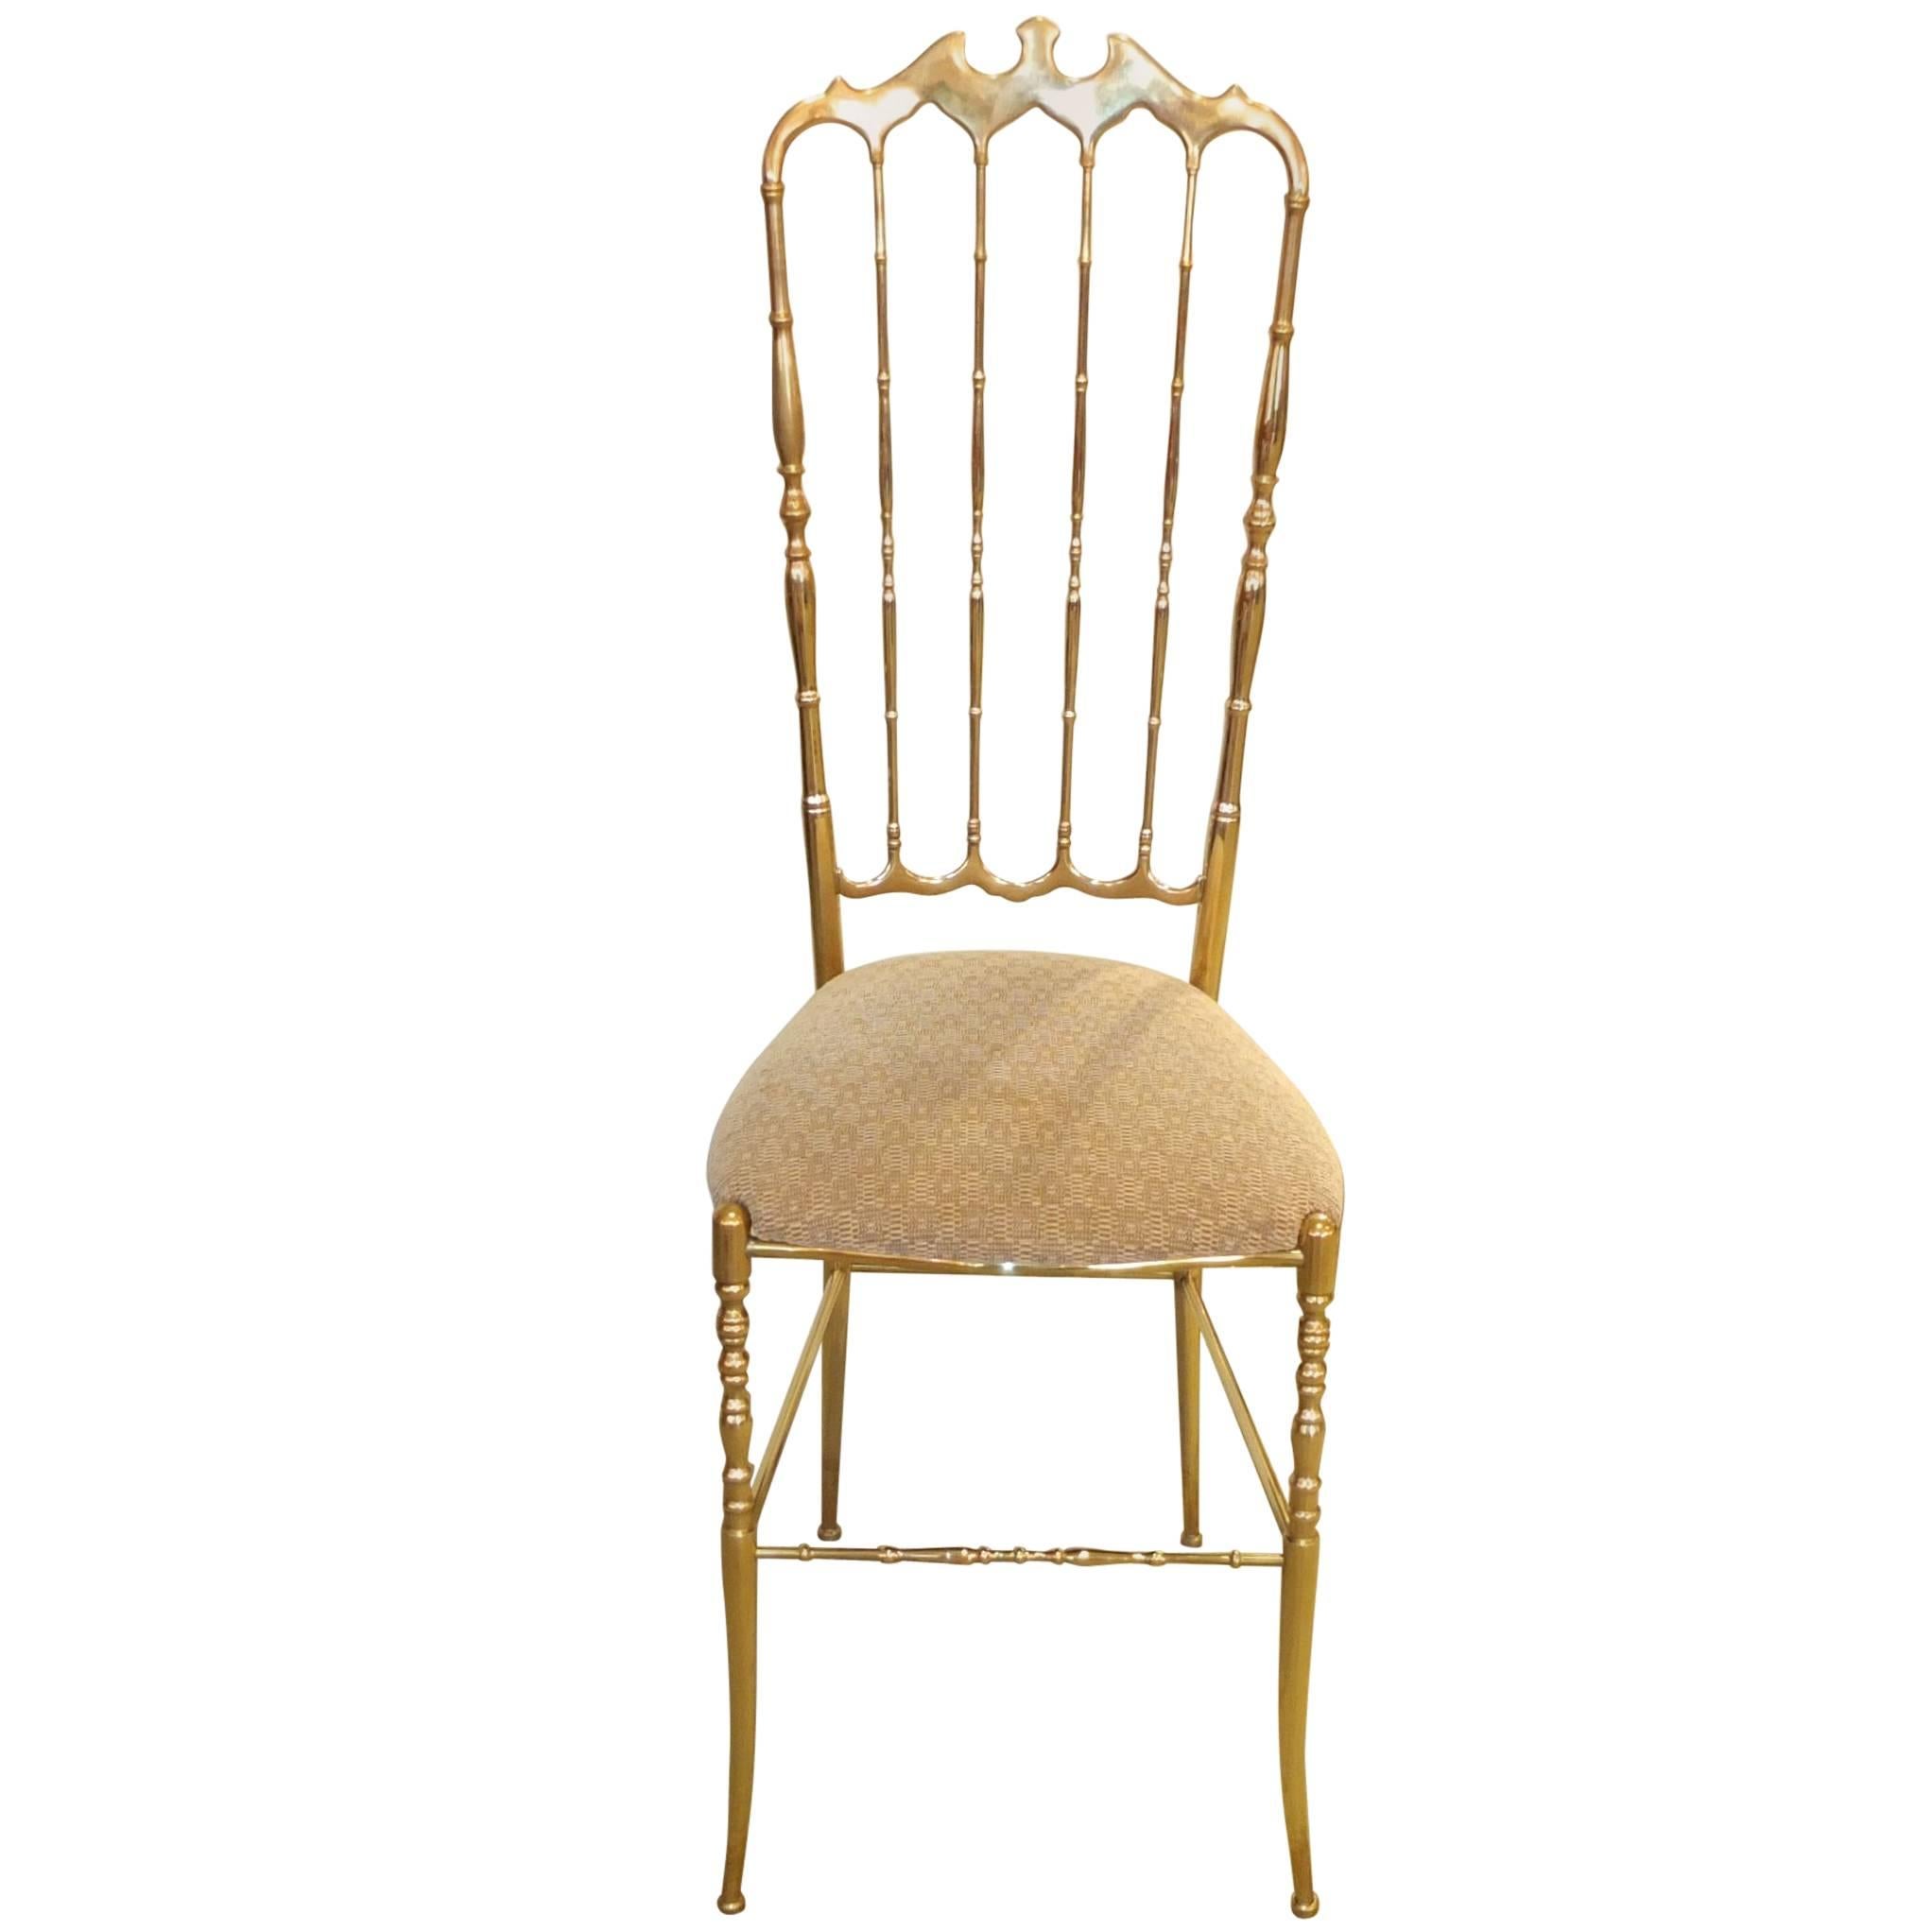 Solid Brass High Back Chiavari Chair